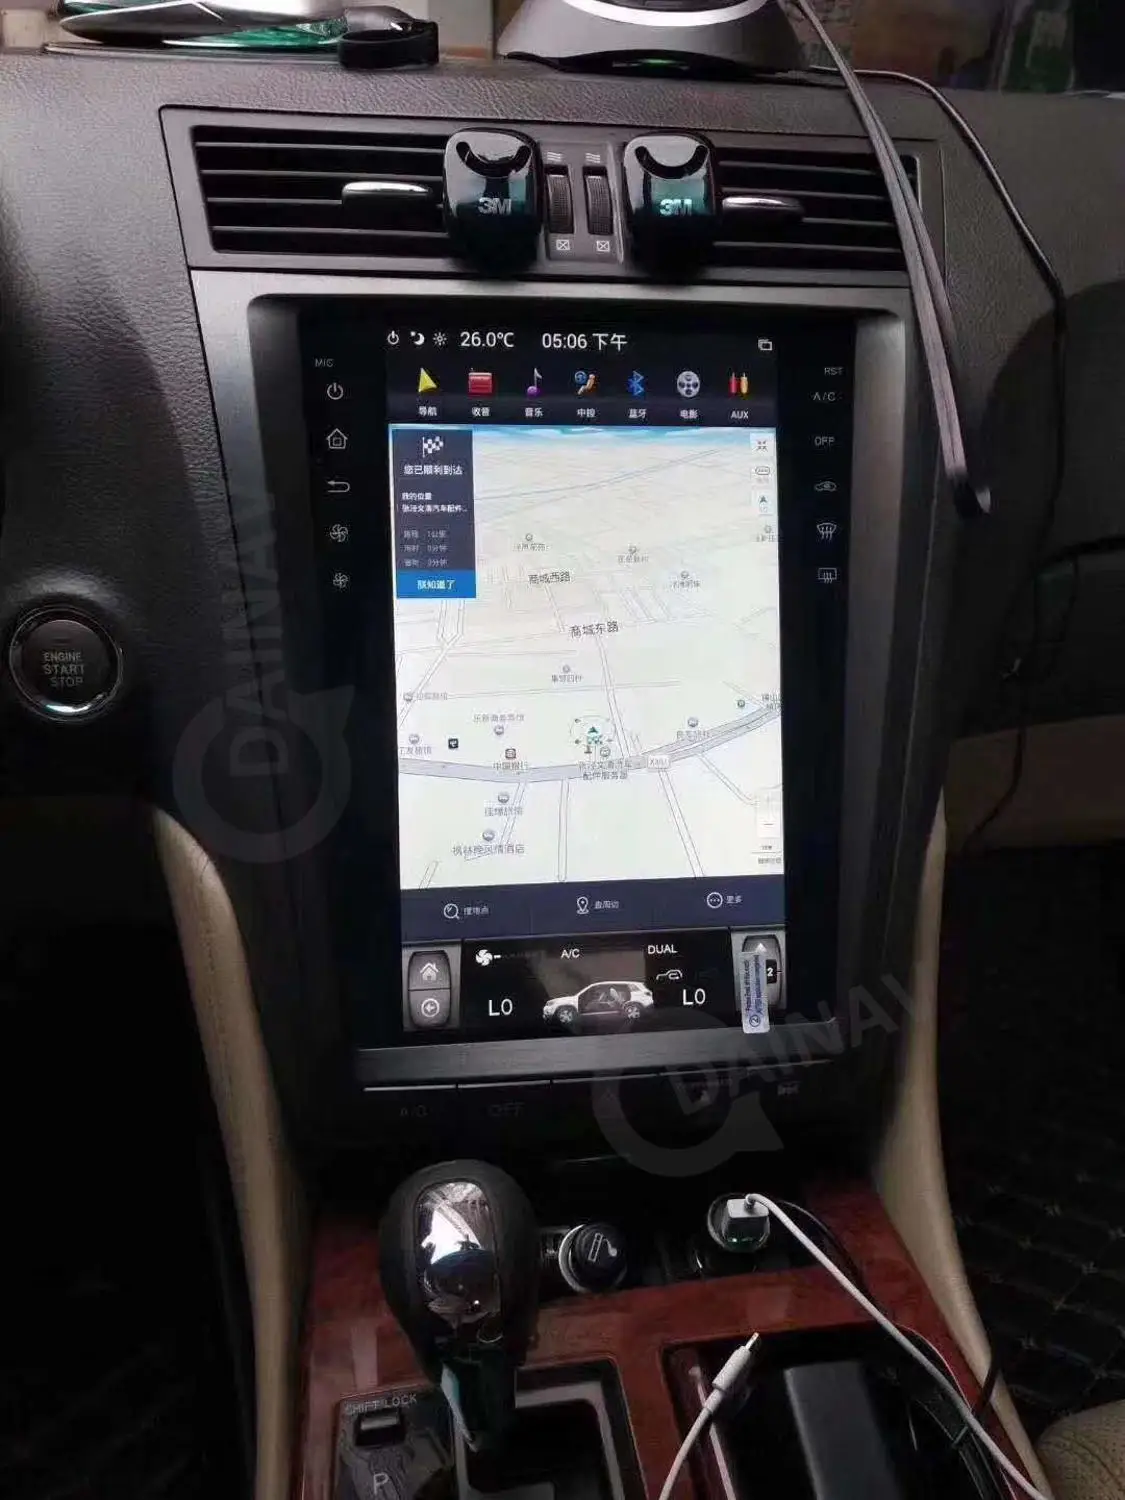 Večpredstavnostna GPS Navigacija Za Lexus GS GS300 GS460 GS450 GS350 2004-2011 Navpično zaslon Avto autoradio stereo, DVD Predvajalnik